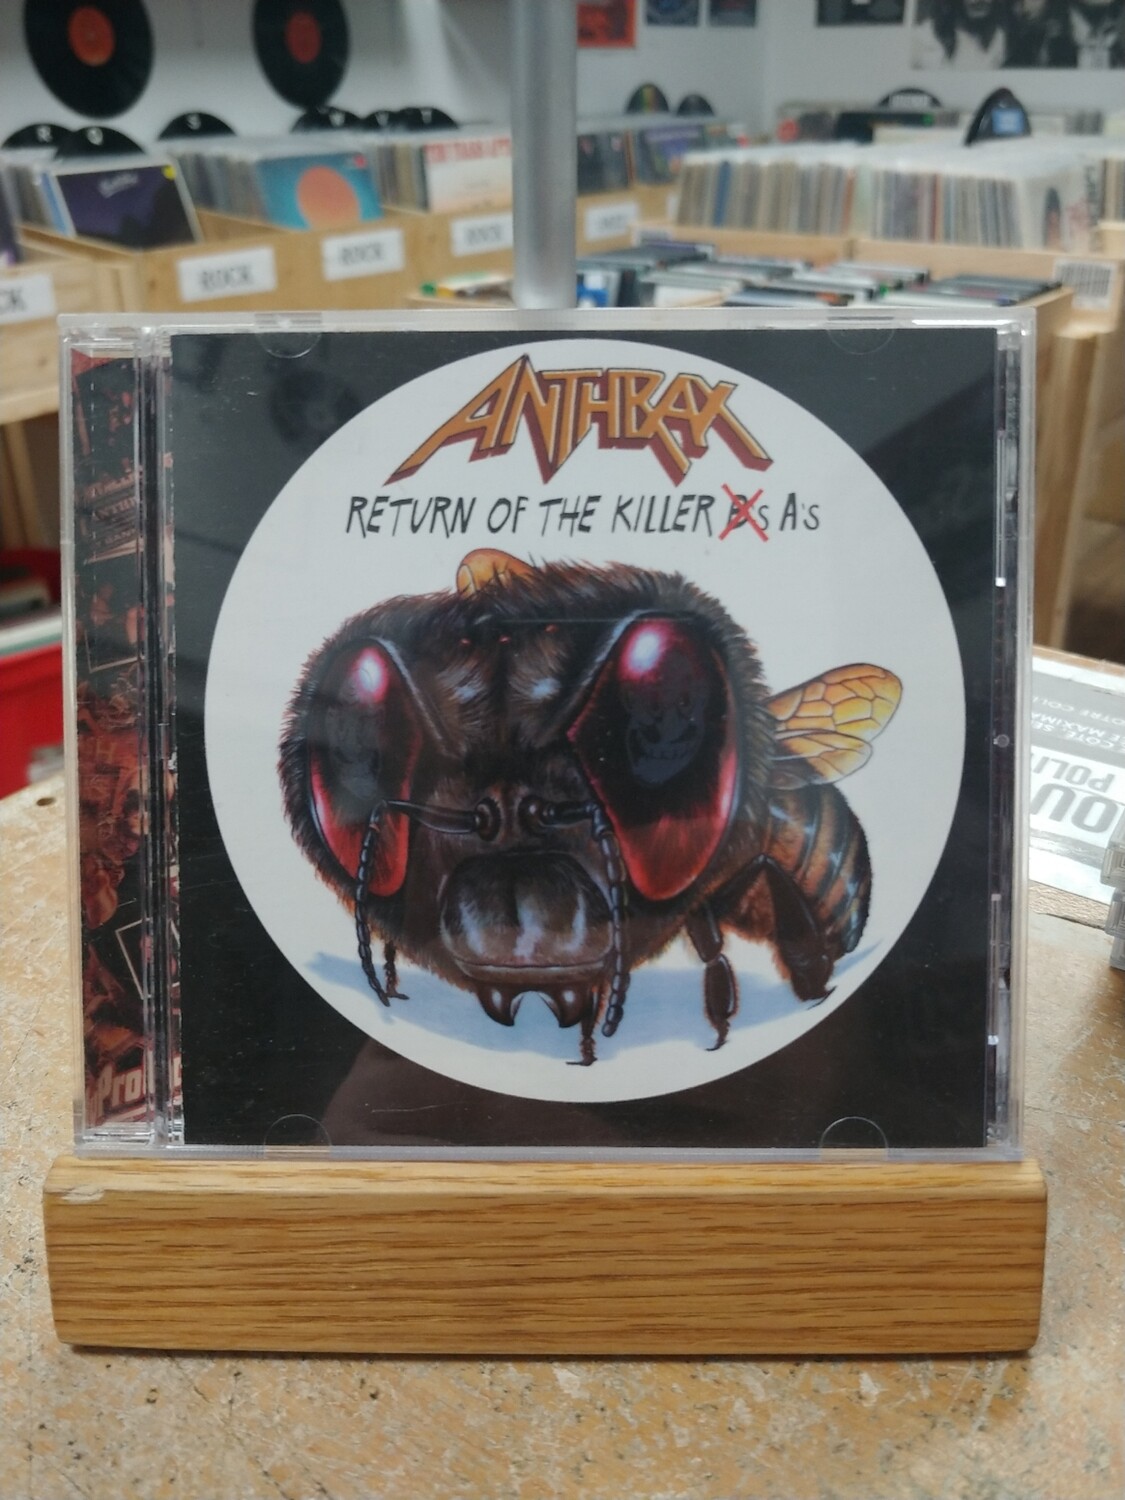 Anthrax - Return of the Killer A's (CD)